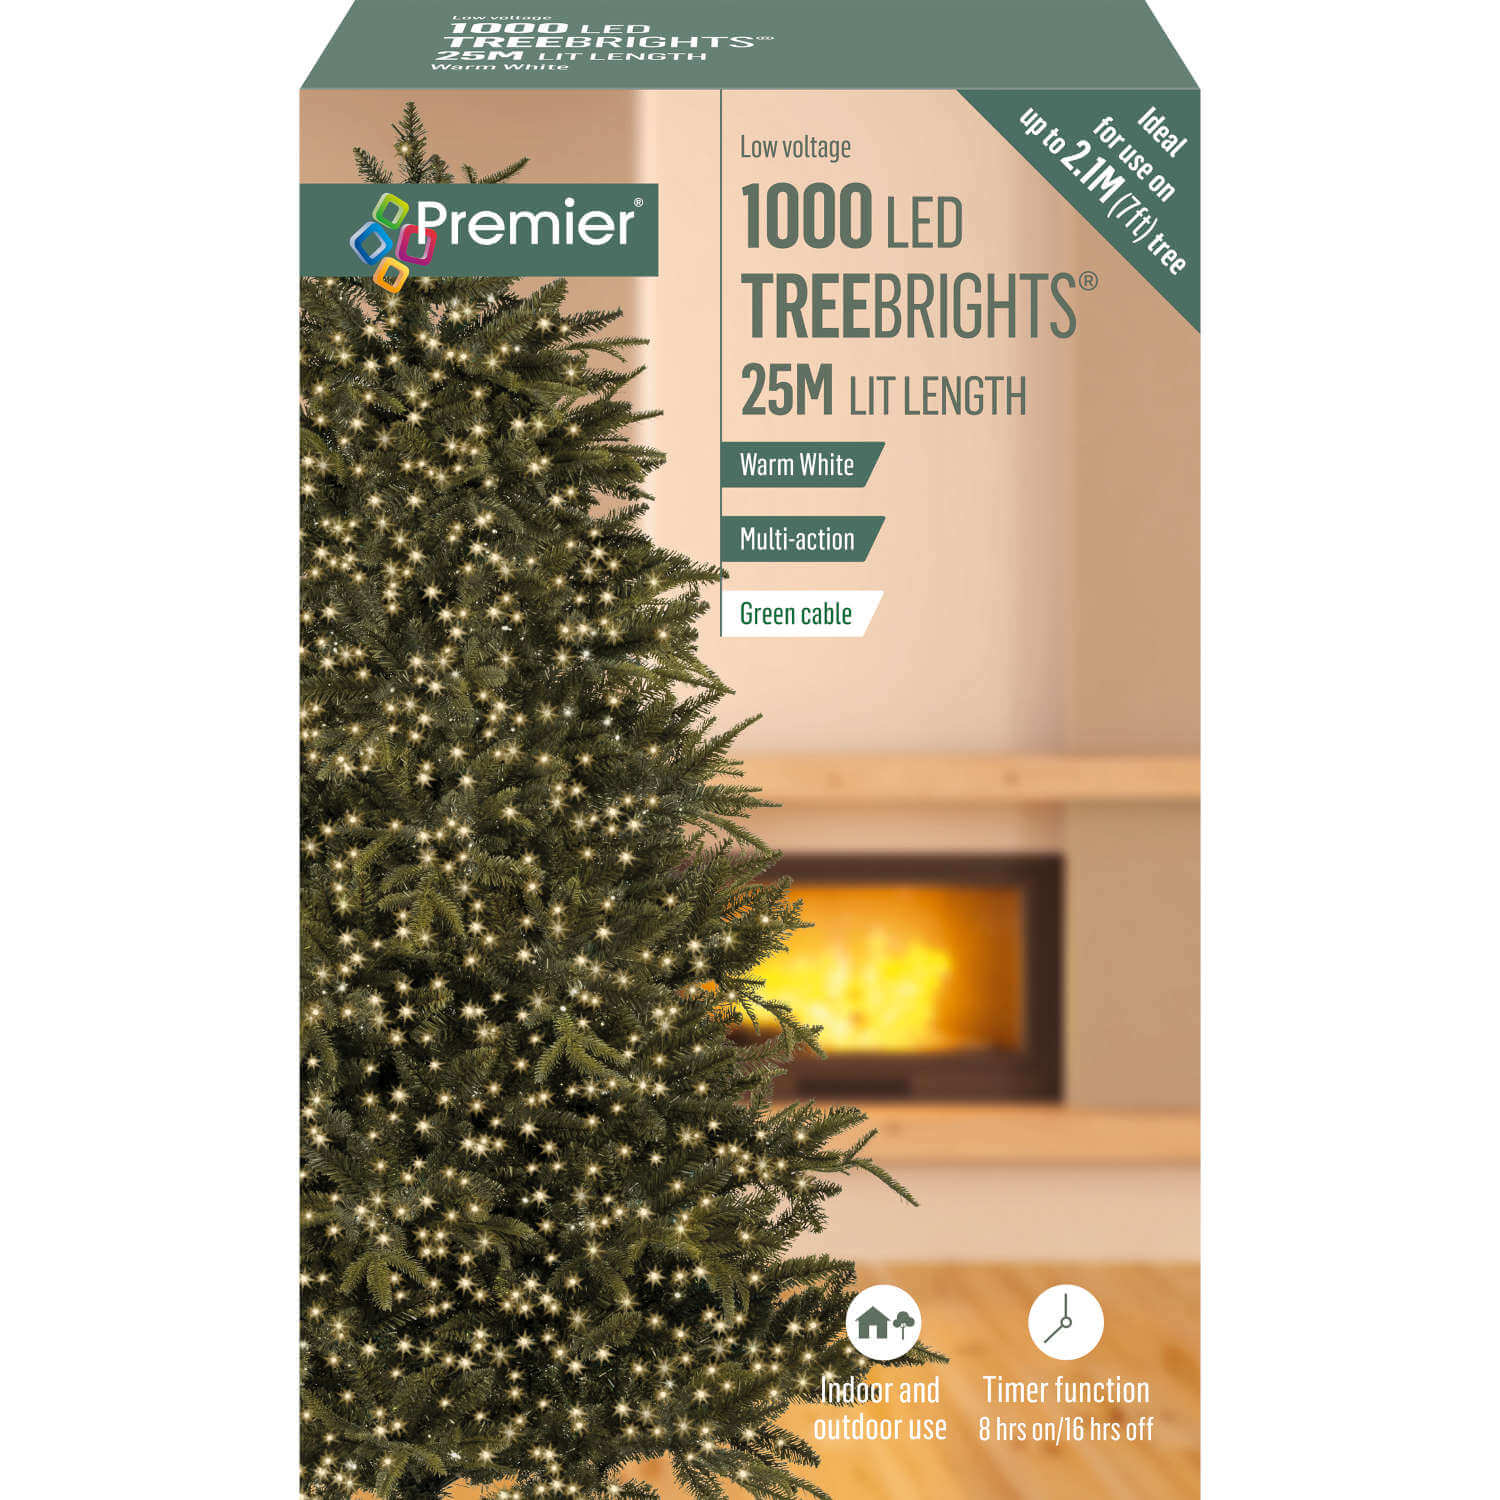 1000 Tree Brights Christmas Lights - Warm White